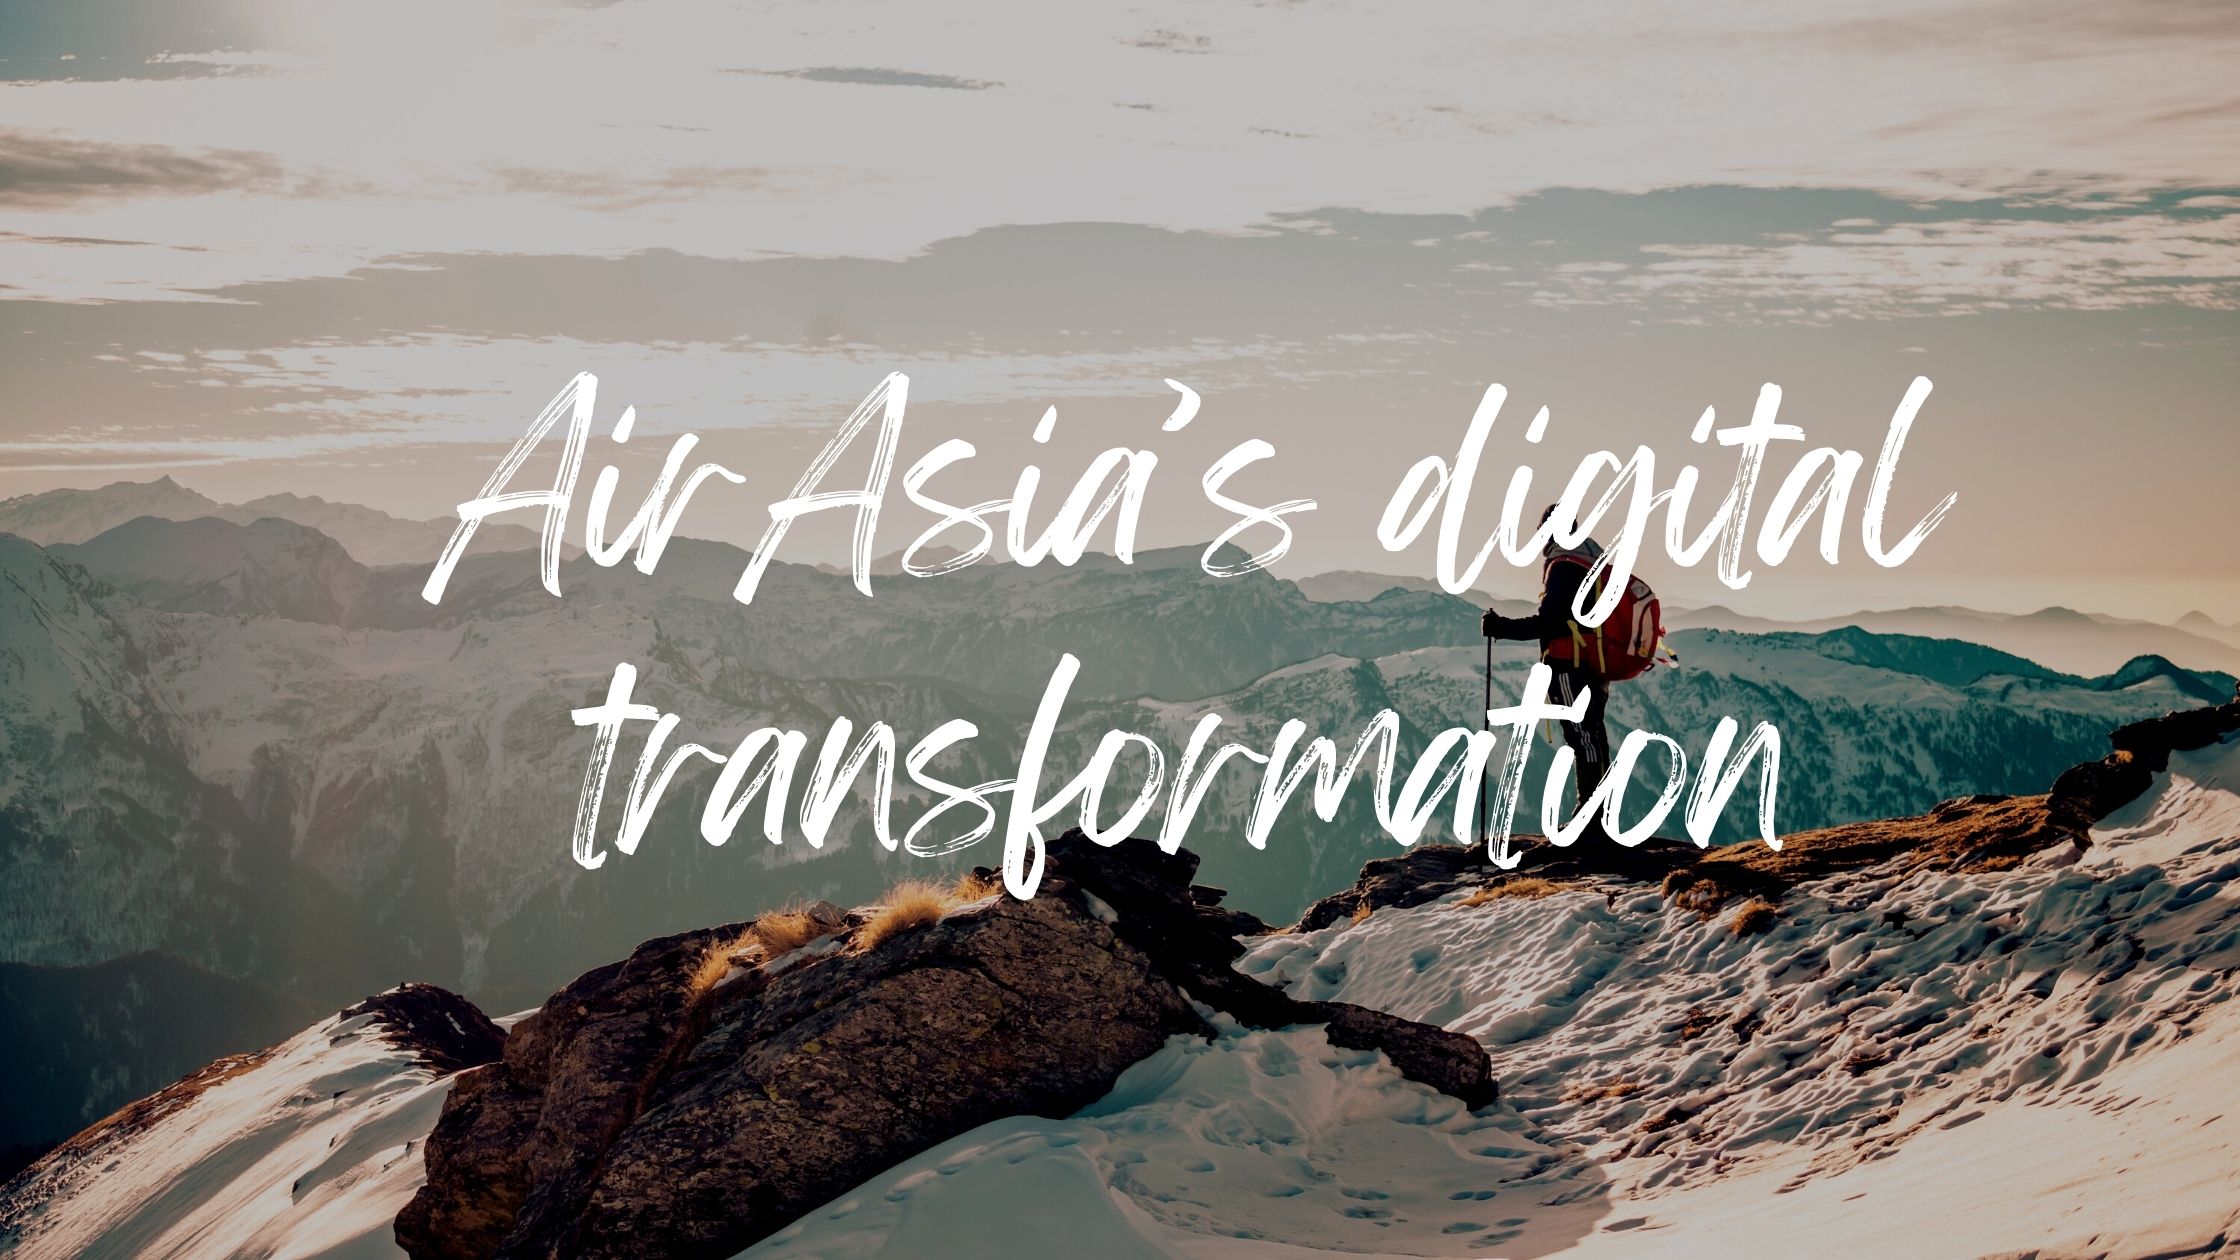 AirAsia’s digital transformation